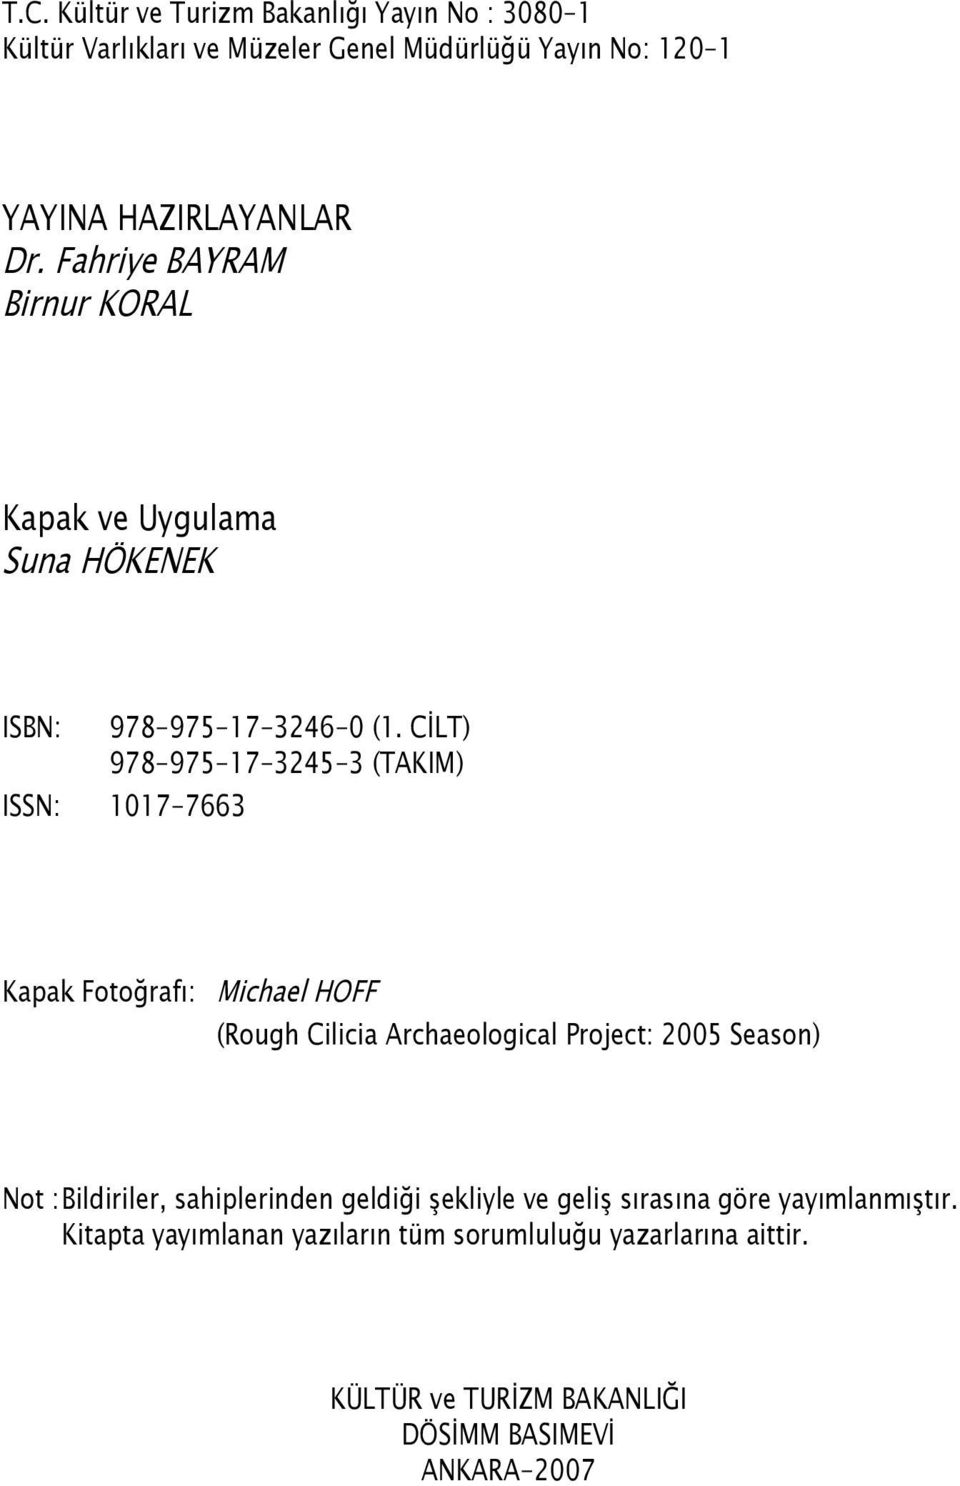 C LT) 978-975-17-3245-3 (TAKIM) ISSN: 1017-7663 Kapak Foto raf : Michael HOFF (Rough Cilicia Archaeological Project: 2005 Season) Not :